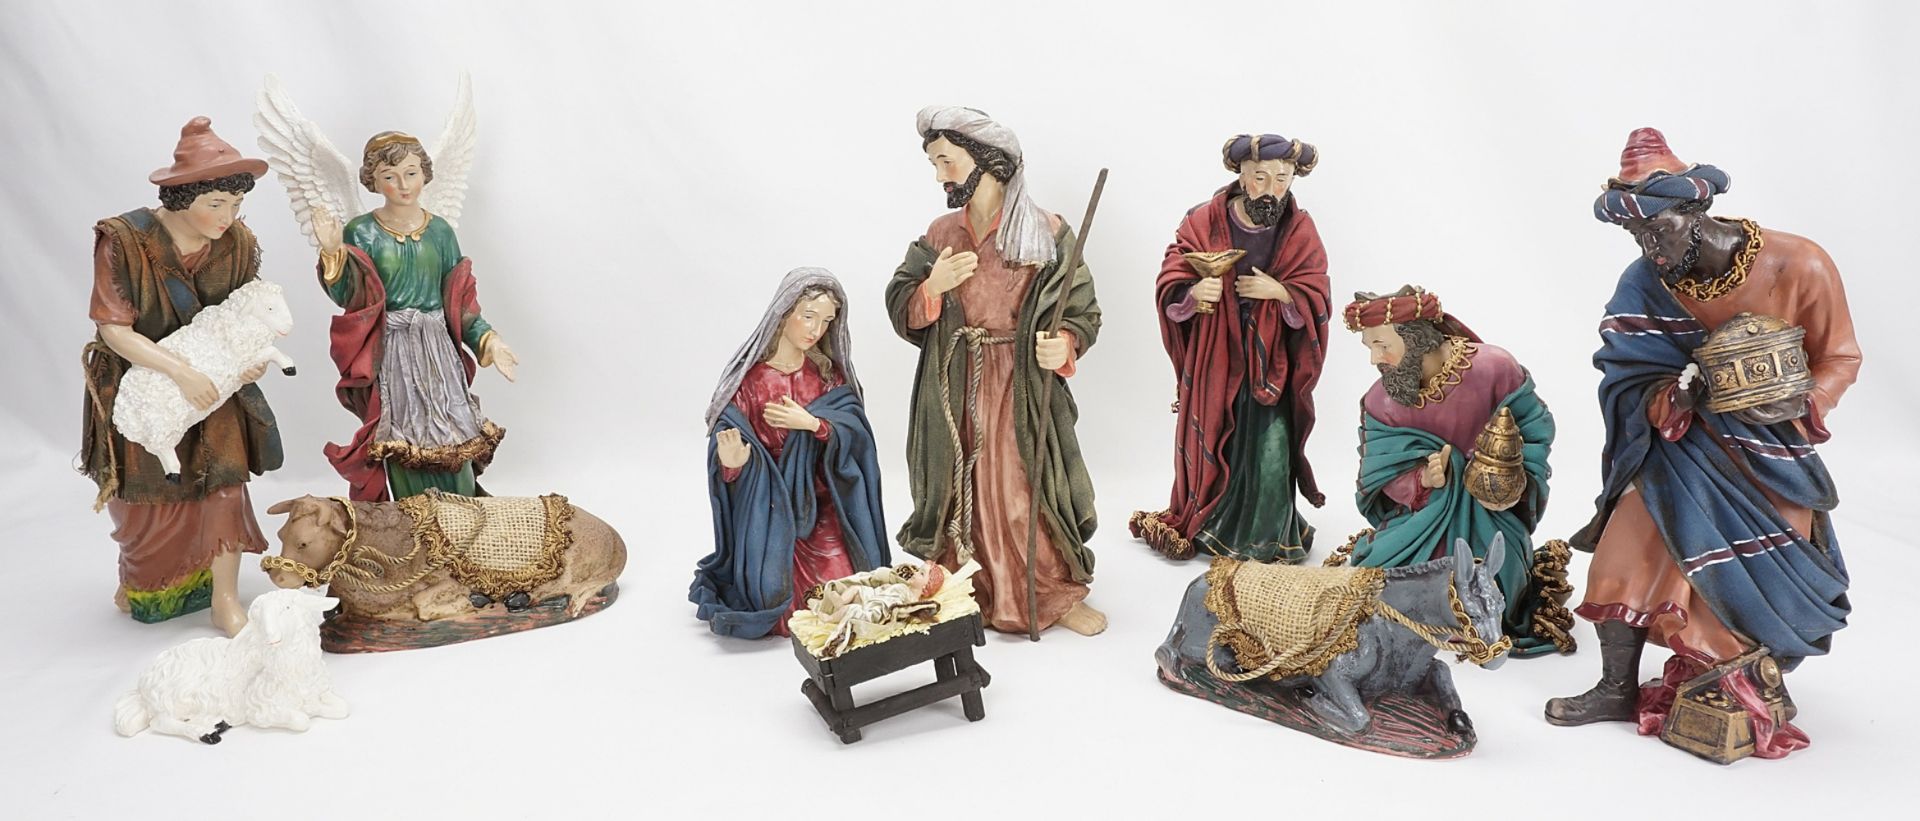 Eleven nativity figurines, 20th century